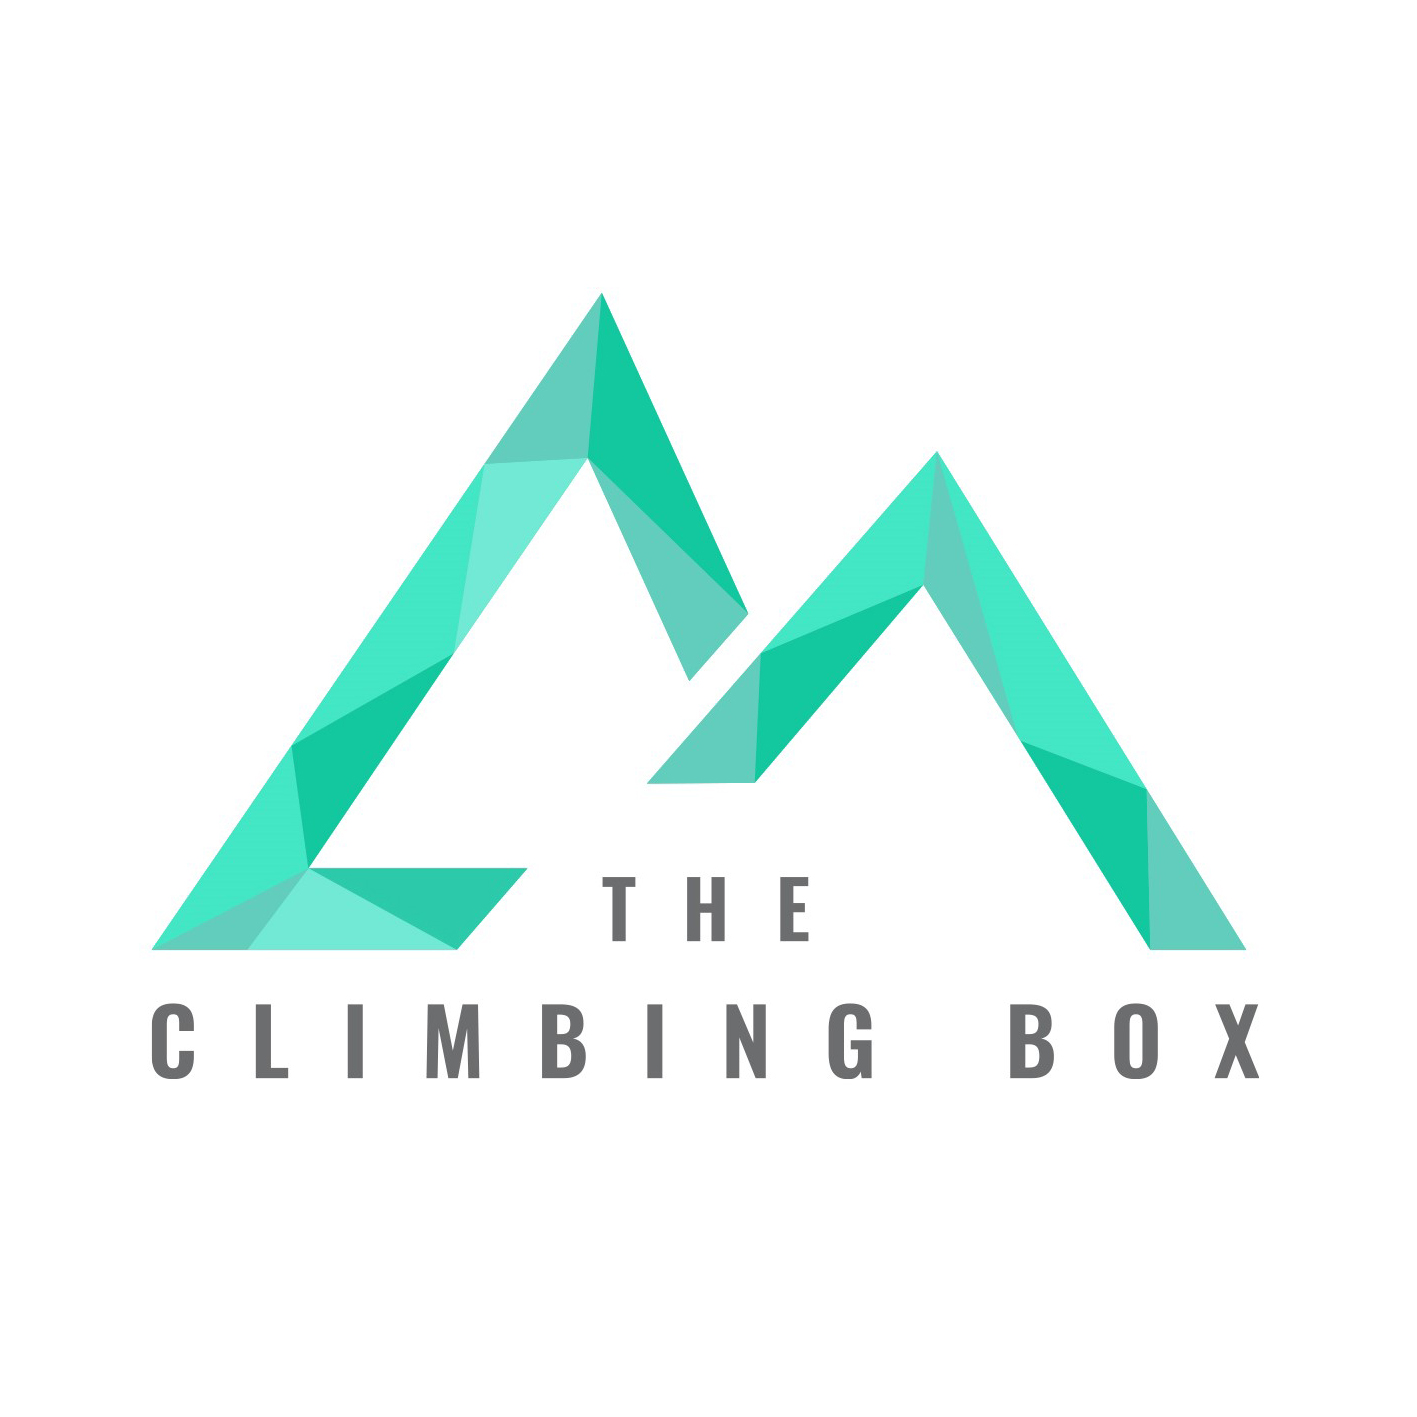 THE CLIMBING BOX